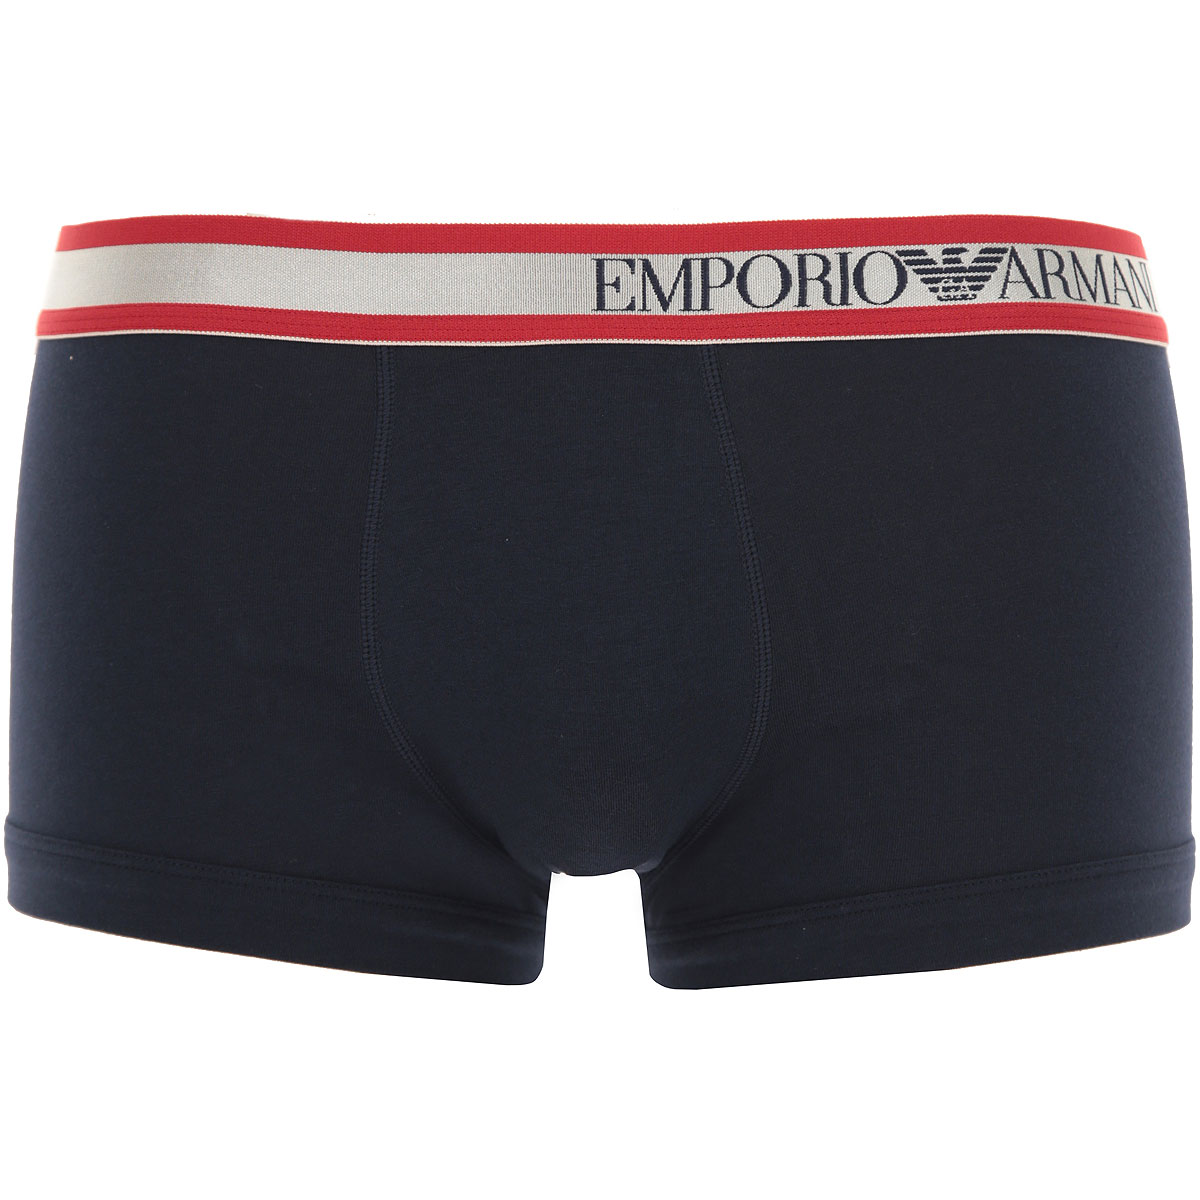 Mens Underwear Emporio Armani, Style code: 111389-1a525-00135